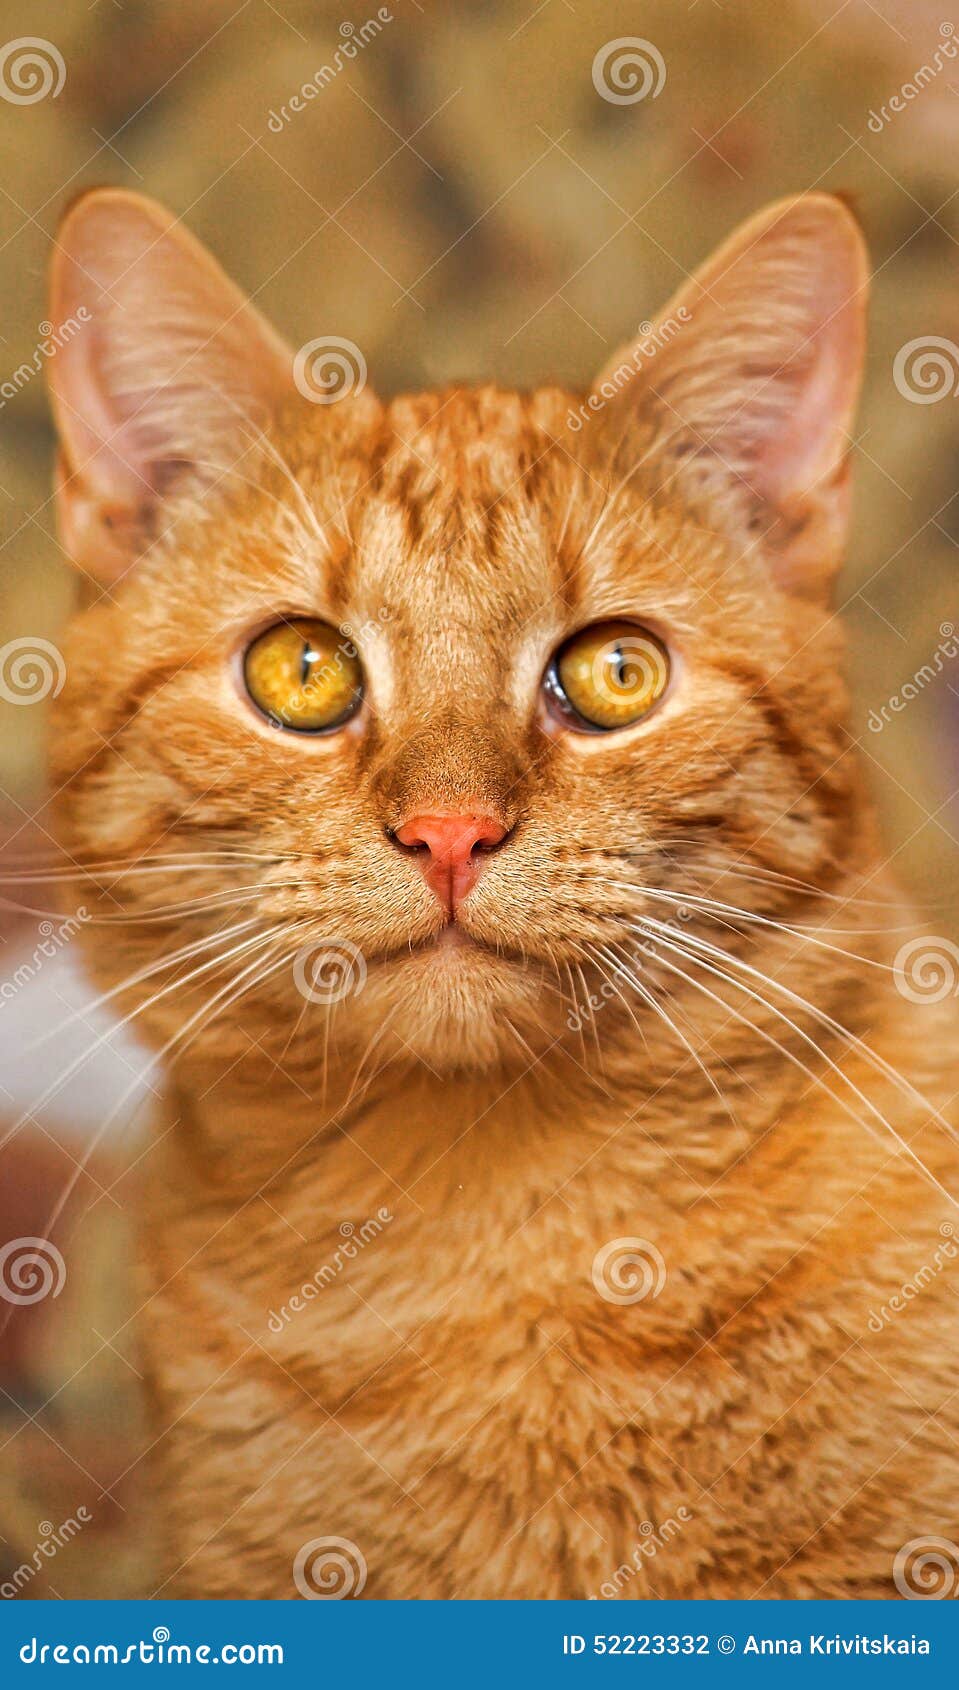 Cat with orange eyes stock photo. Image of yellow, looking - 52223332